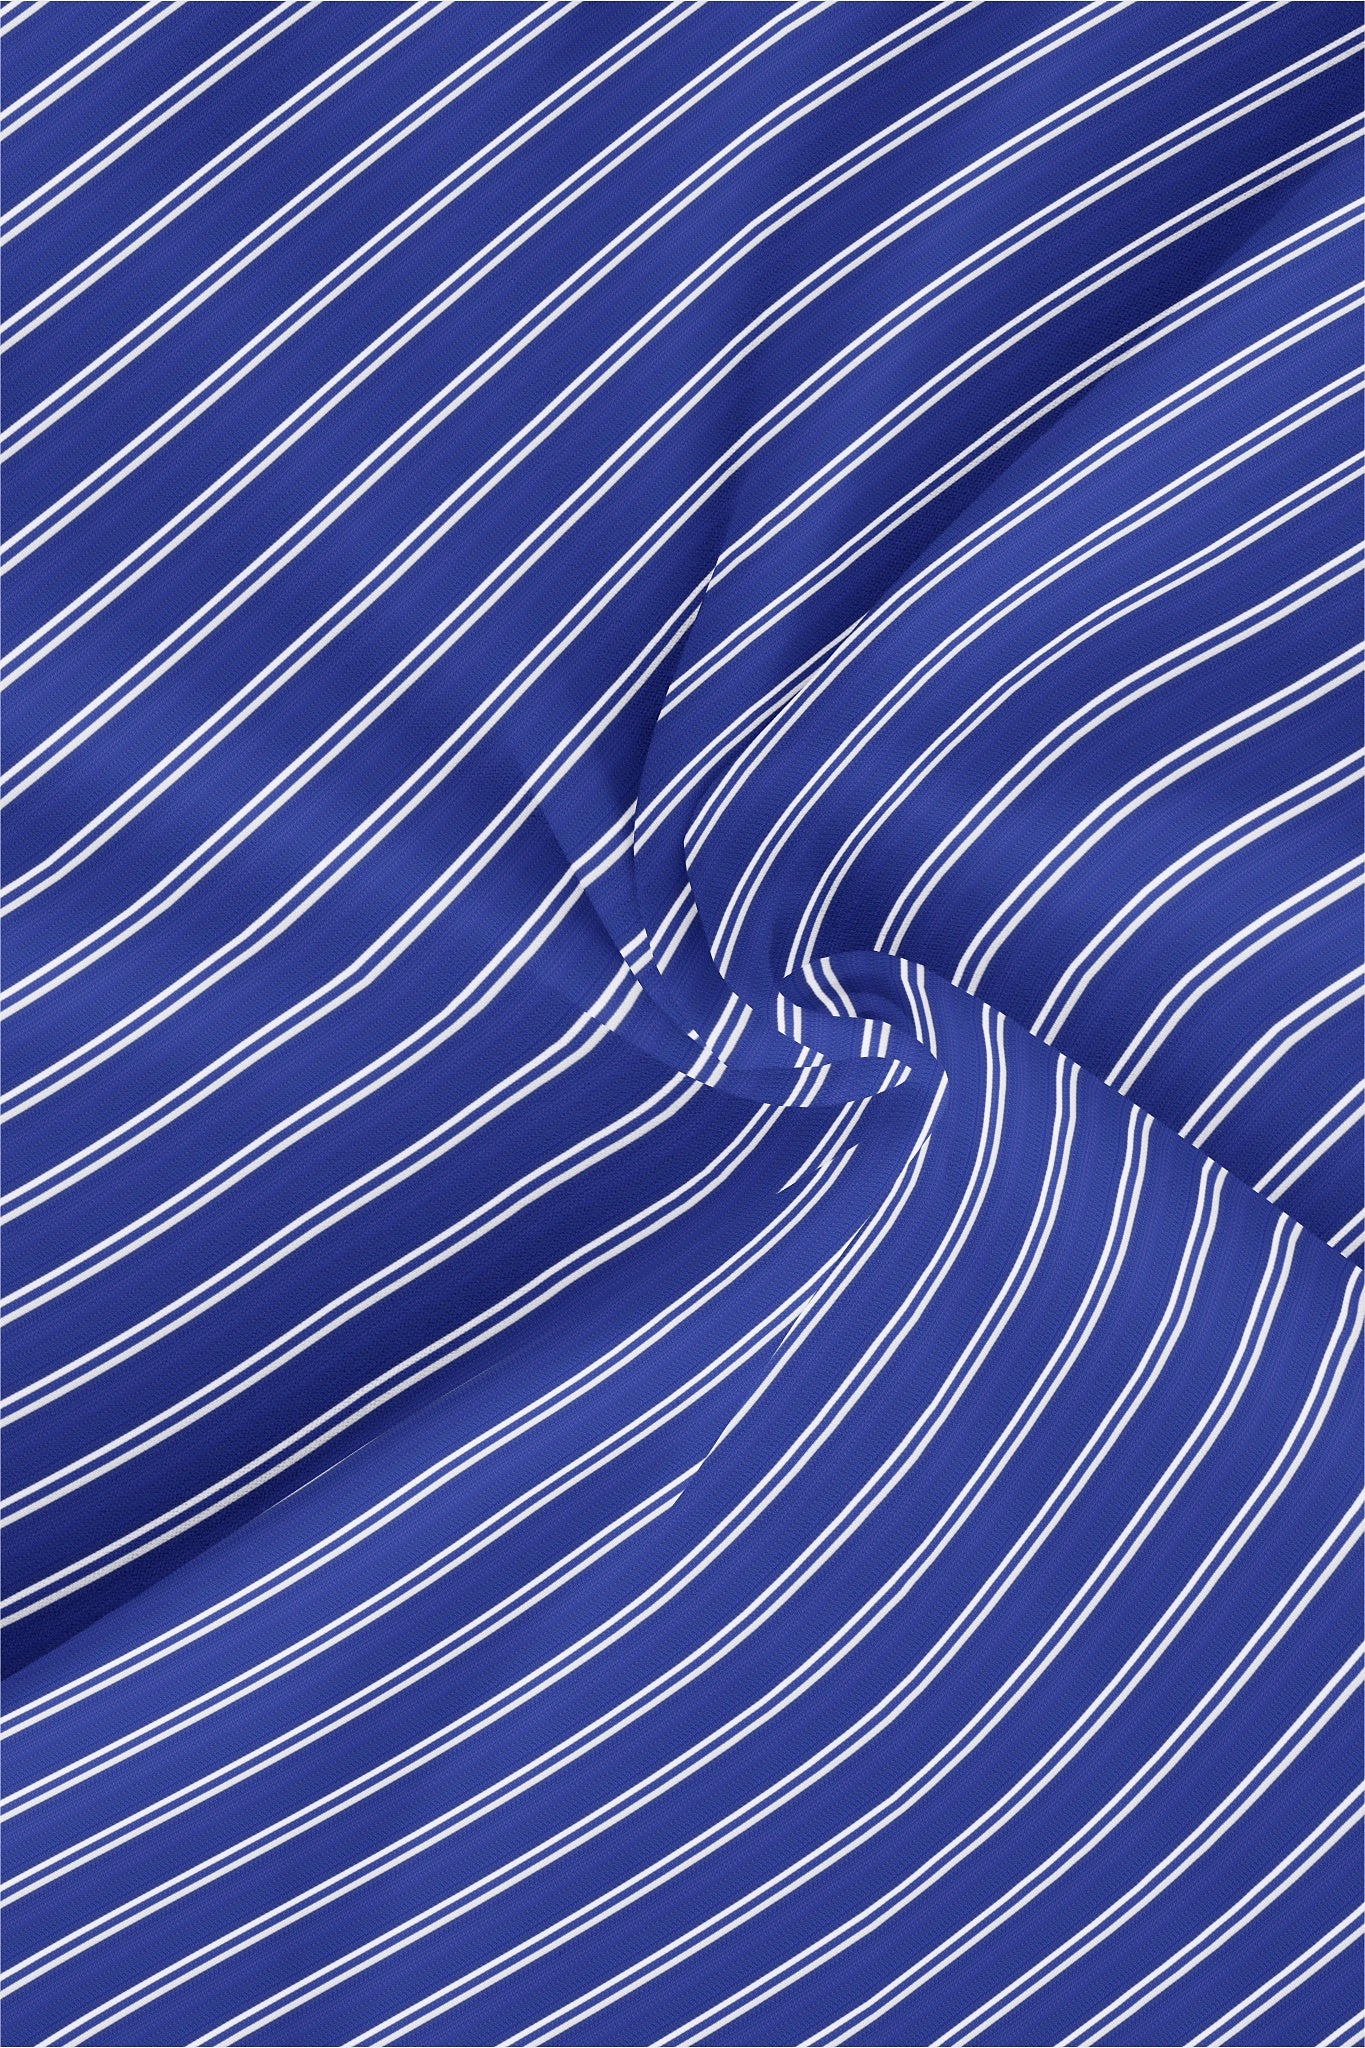 Dark Azure Blue with White Double stripes Men's Cotton shirt